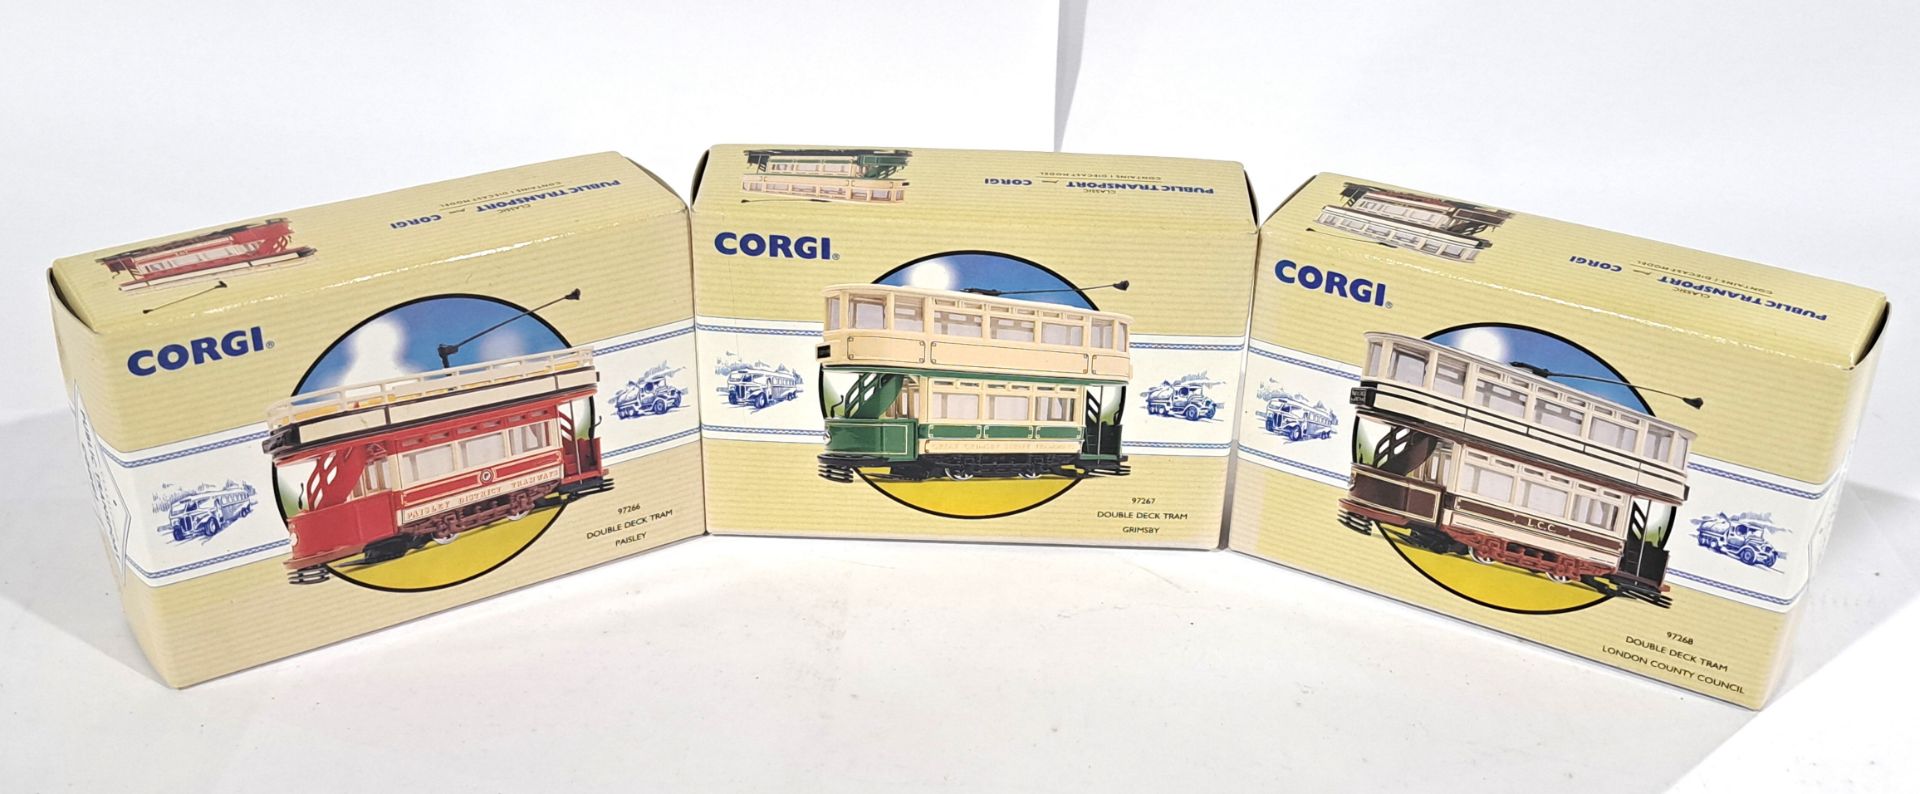 Corgi, a boxed Bus and Tram group